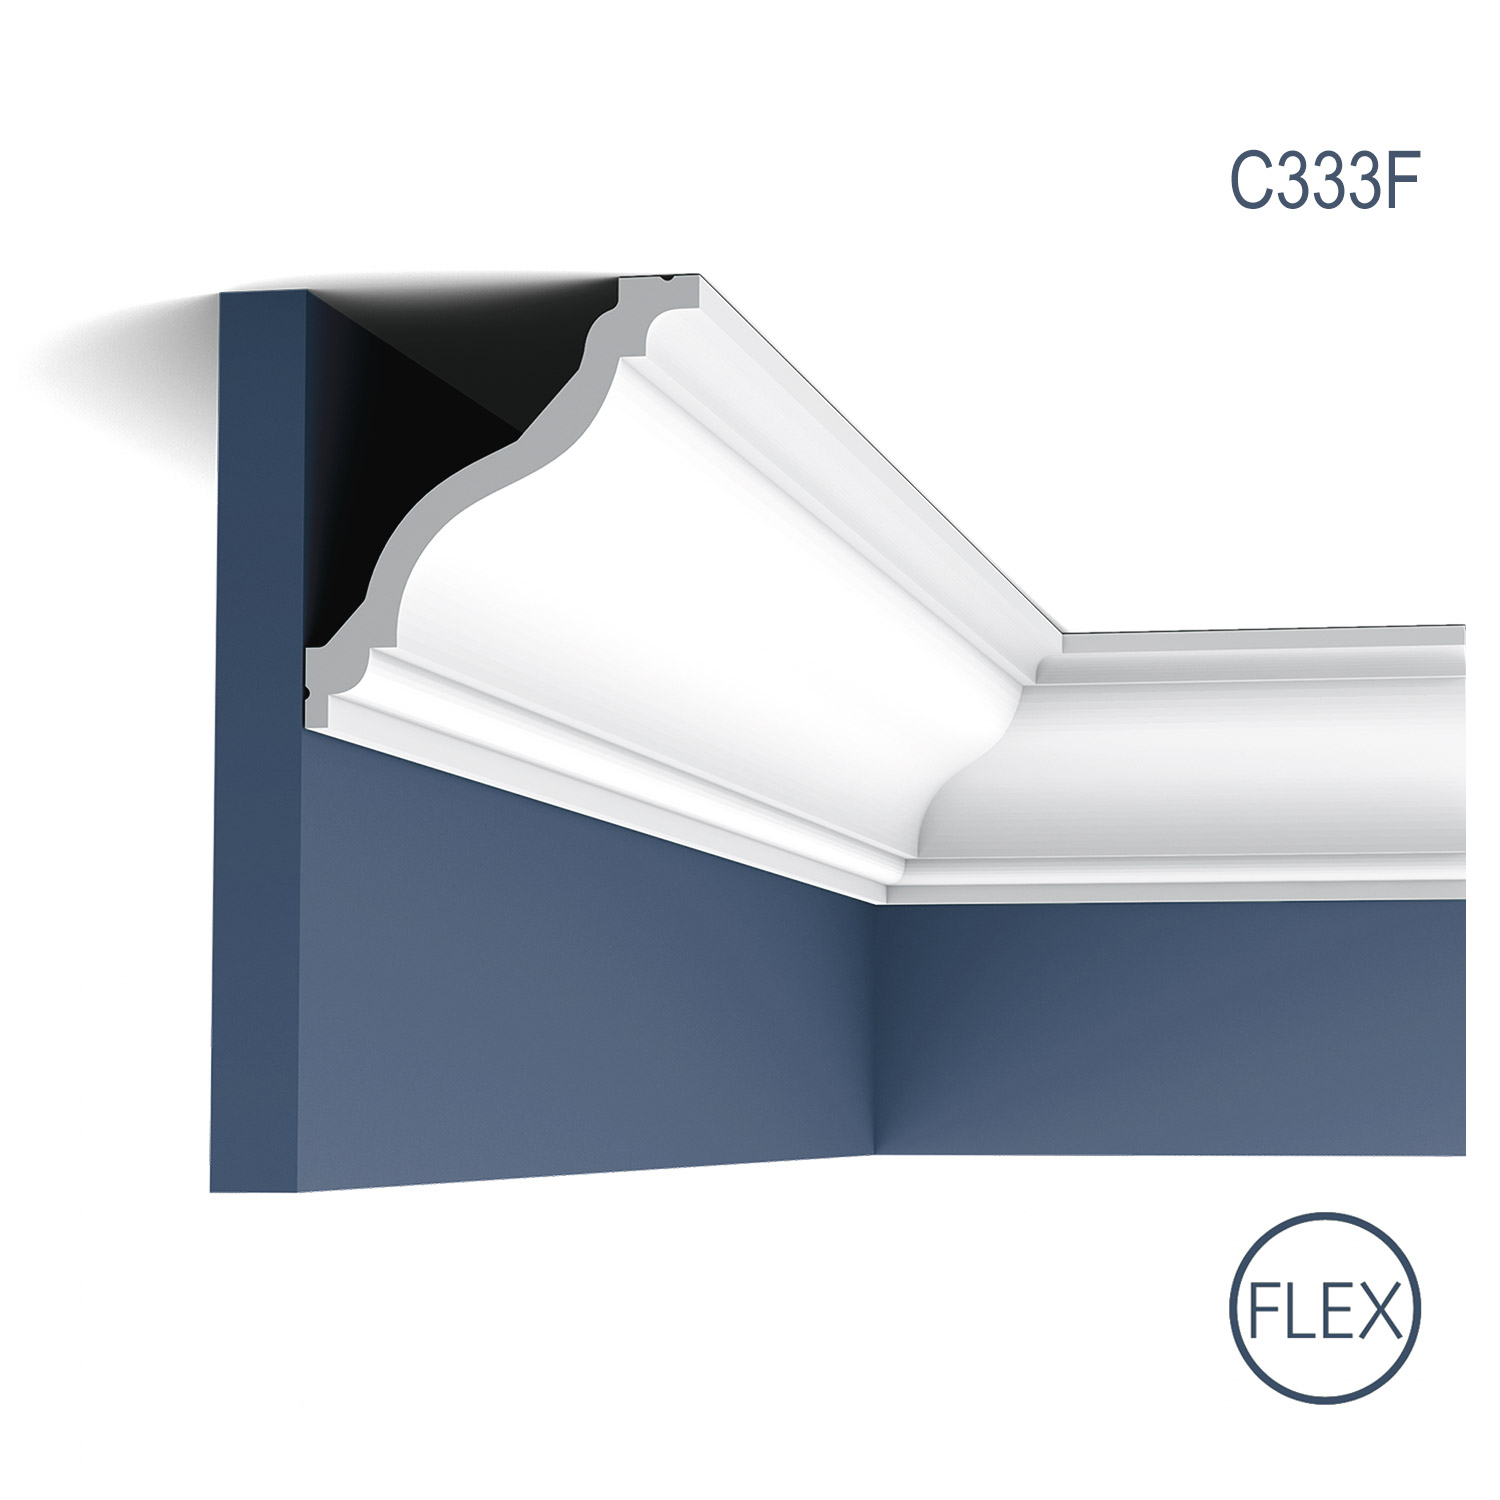 Cornisa Flex Luxxus C333F, Dimensiuni: 200 X 12.2 X 11.1 cm, Orac Decor